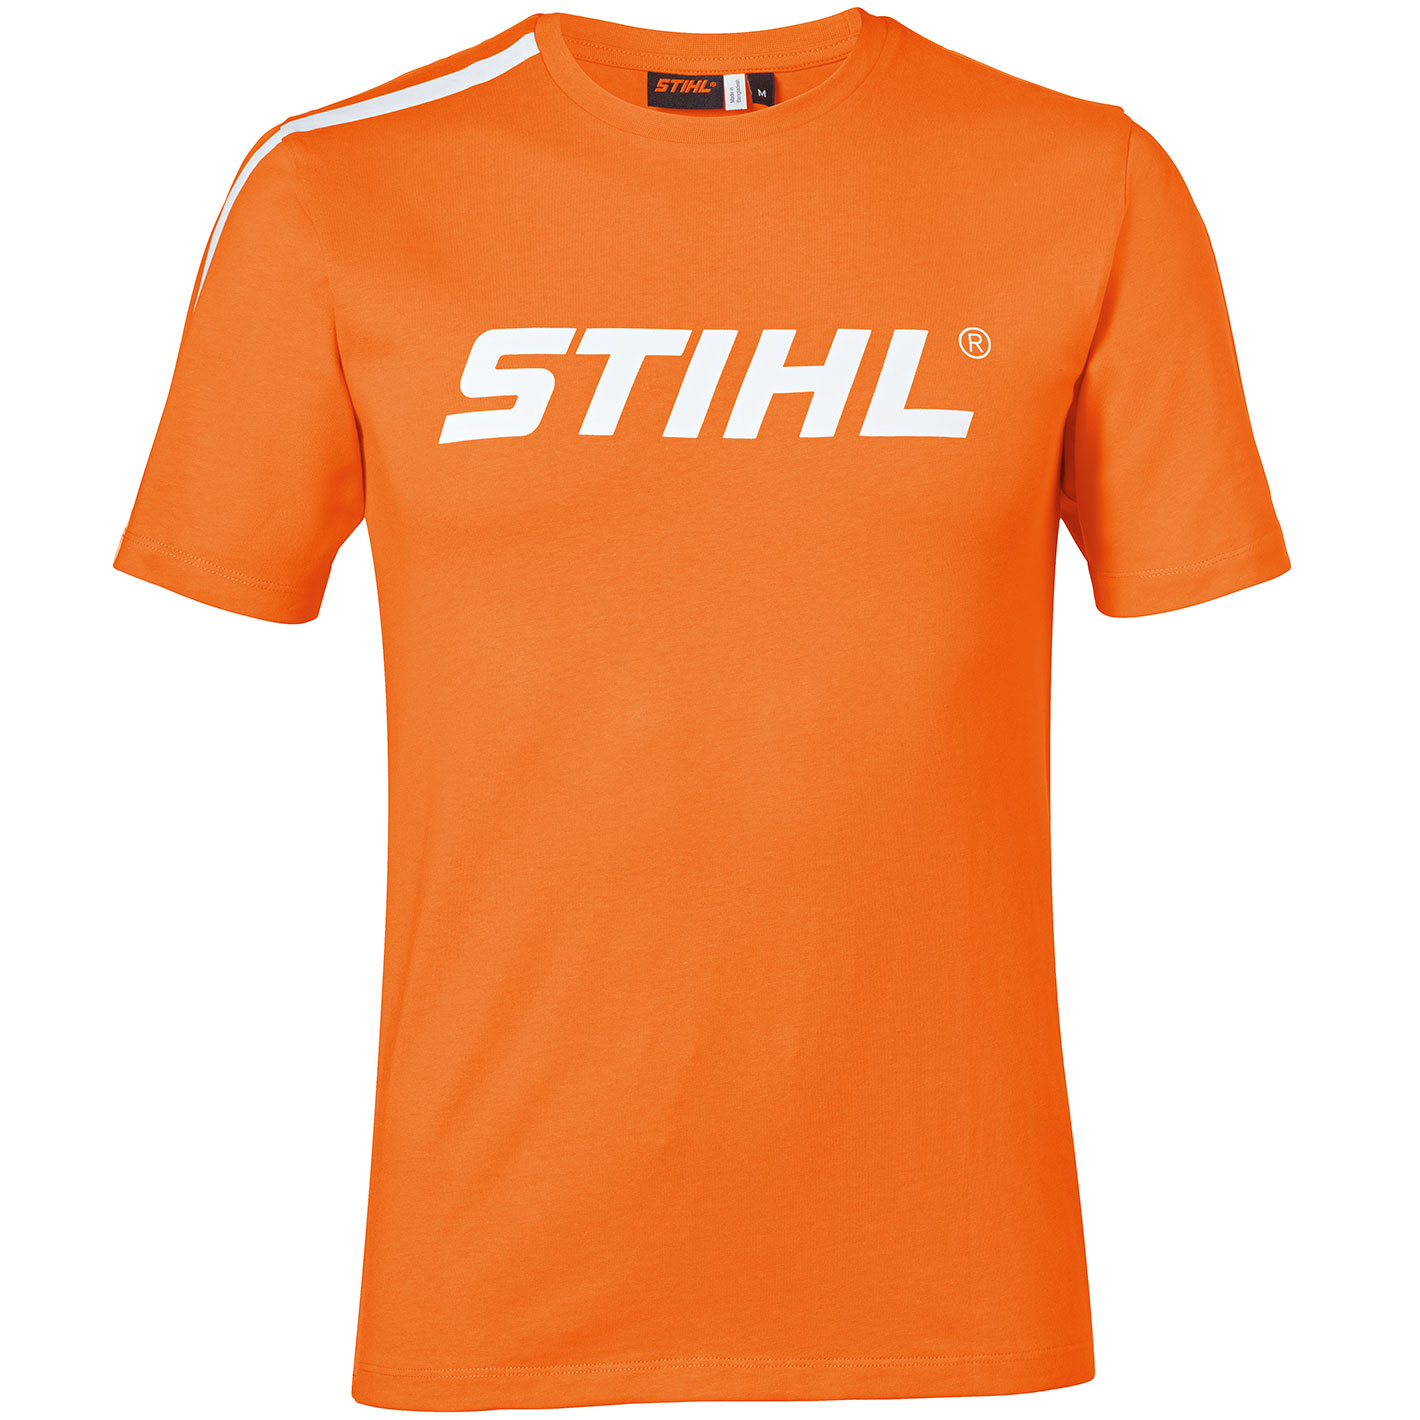 T-shirt orange "STIHL"